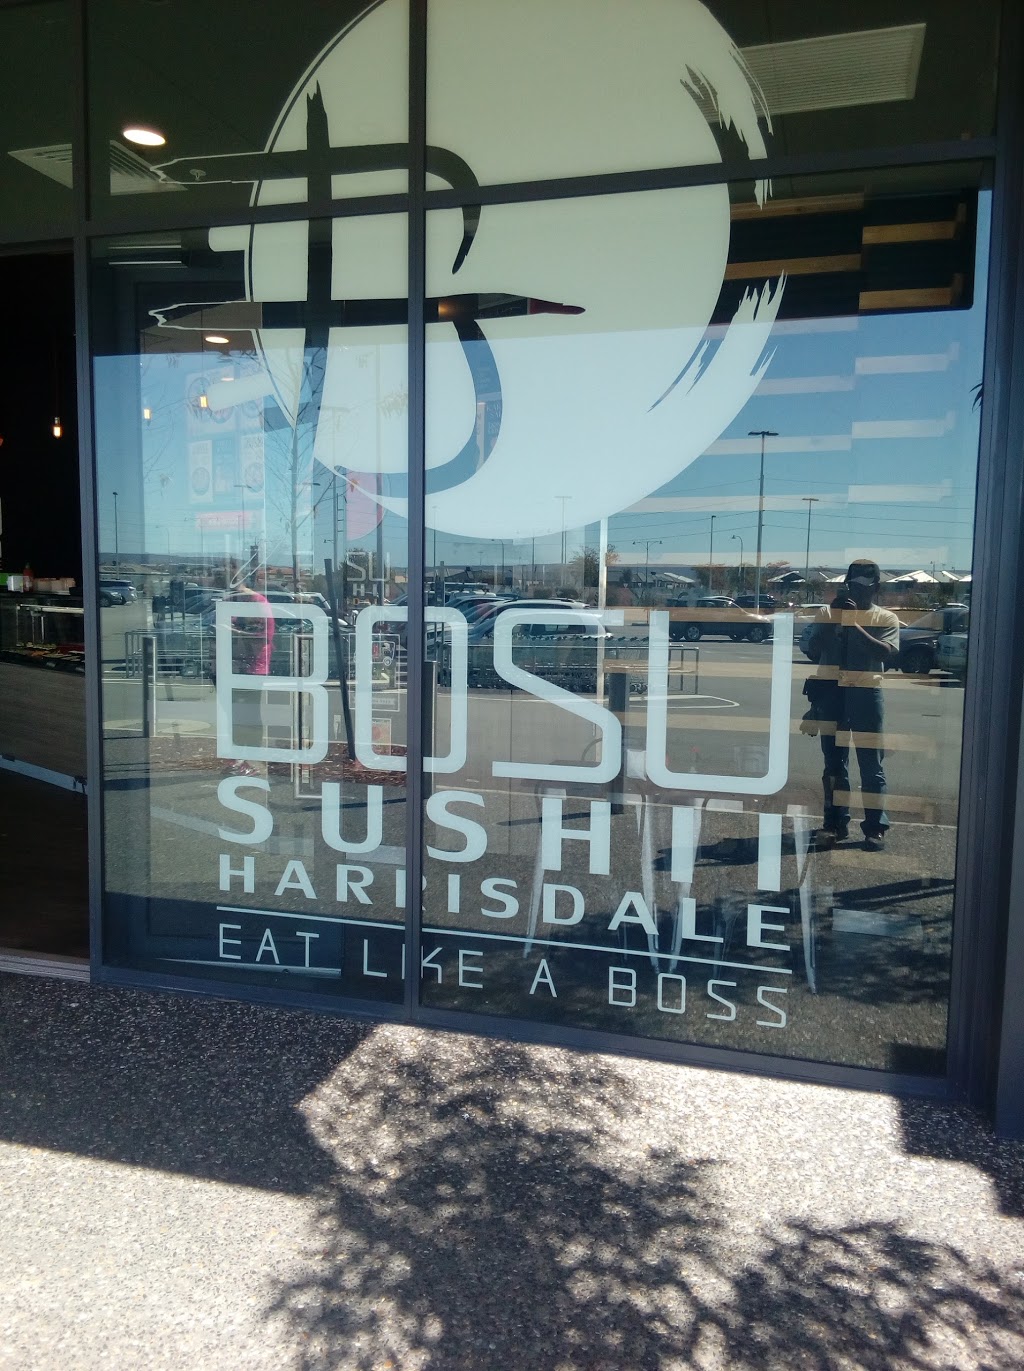 Bosu Sushii | restaurant | 120 Yellowwood Ave, Harrisdale WA 6112, Australia